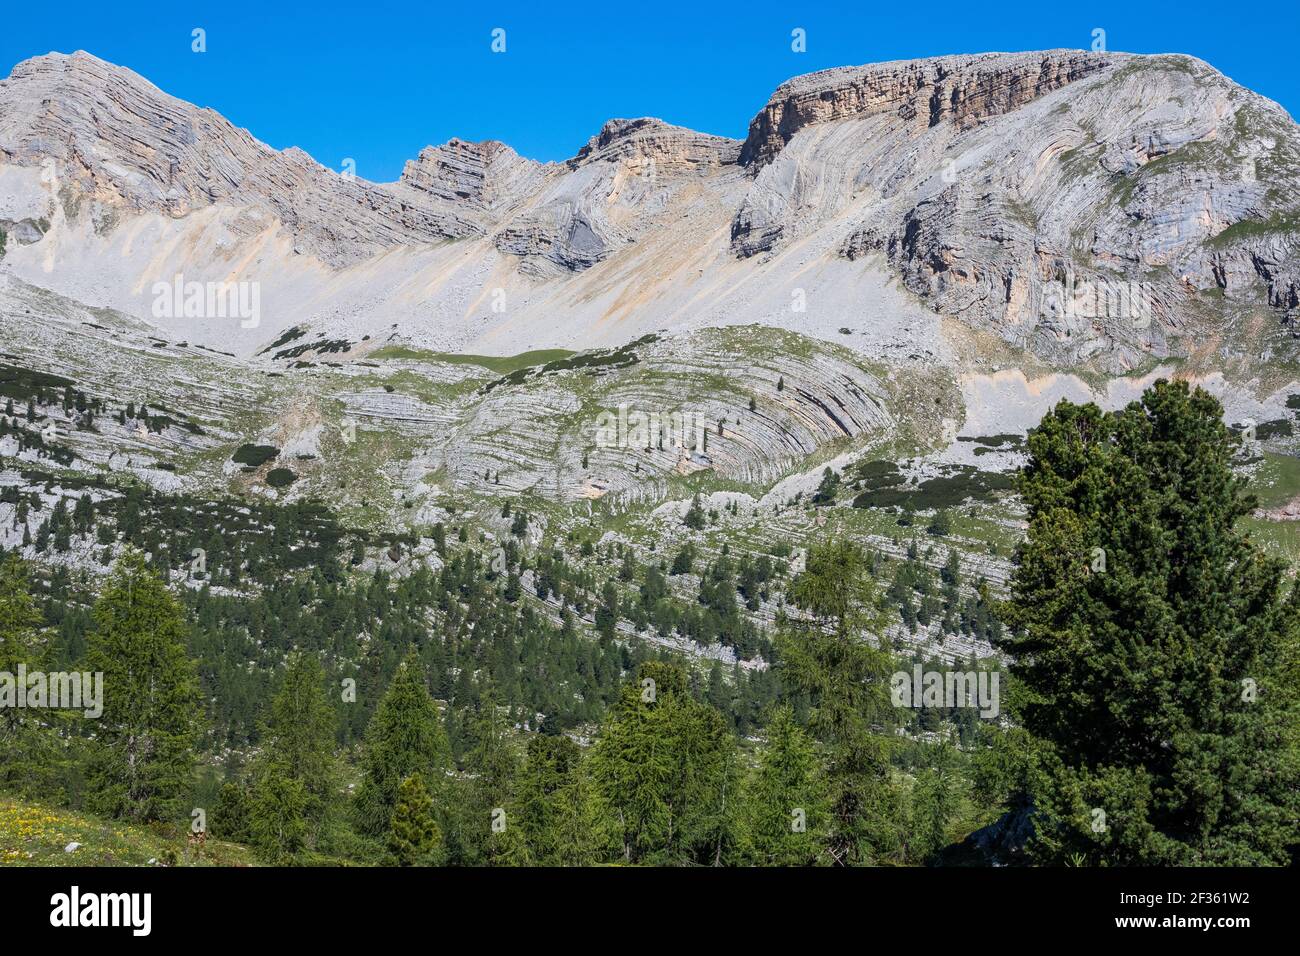 Sedimentary stratifications of limestone rocks on Sas dai Bec mountain. Pinus cembra and Larix decidua trees. Fanes Valley. Italian Alps. Europe. Stock Photo